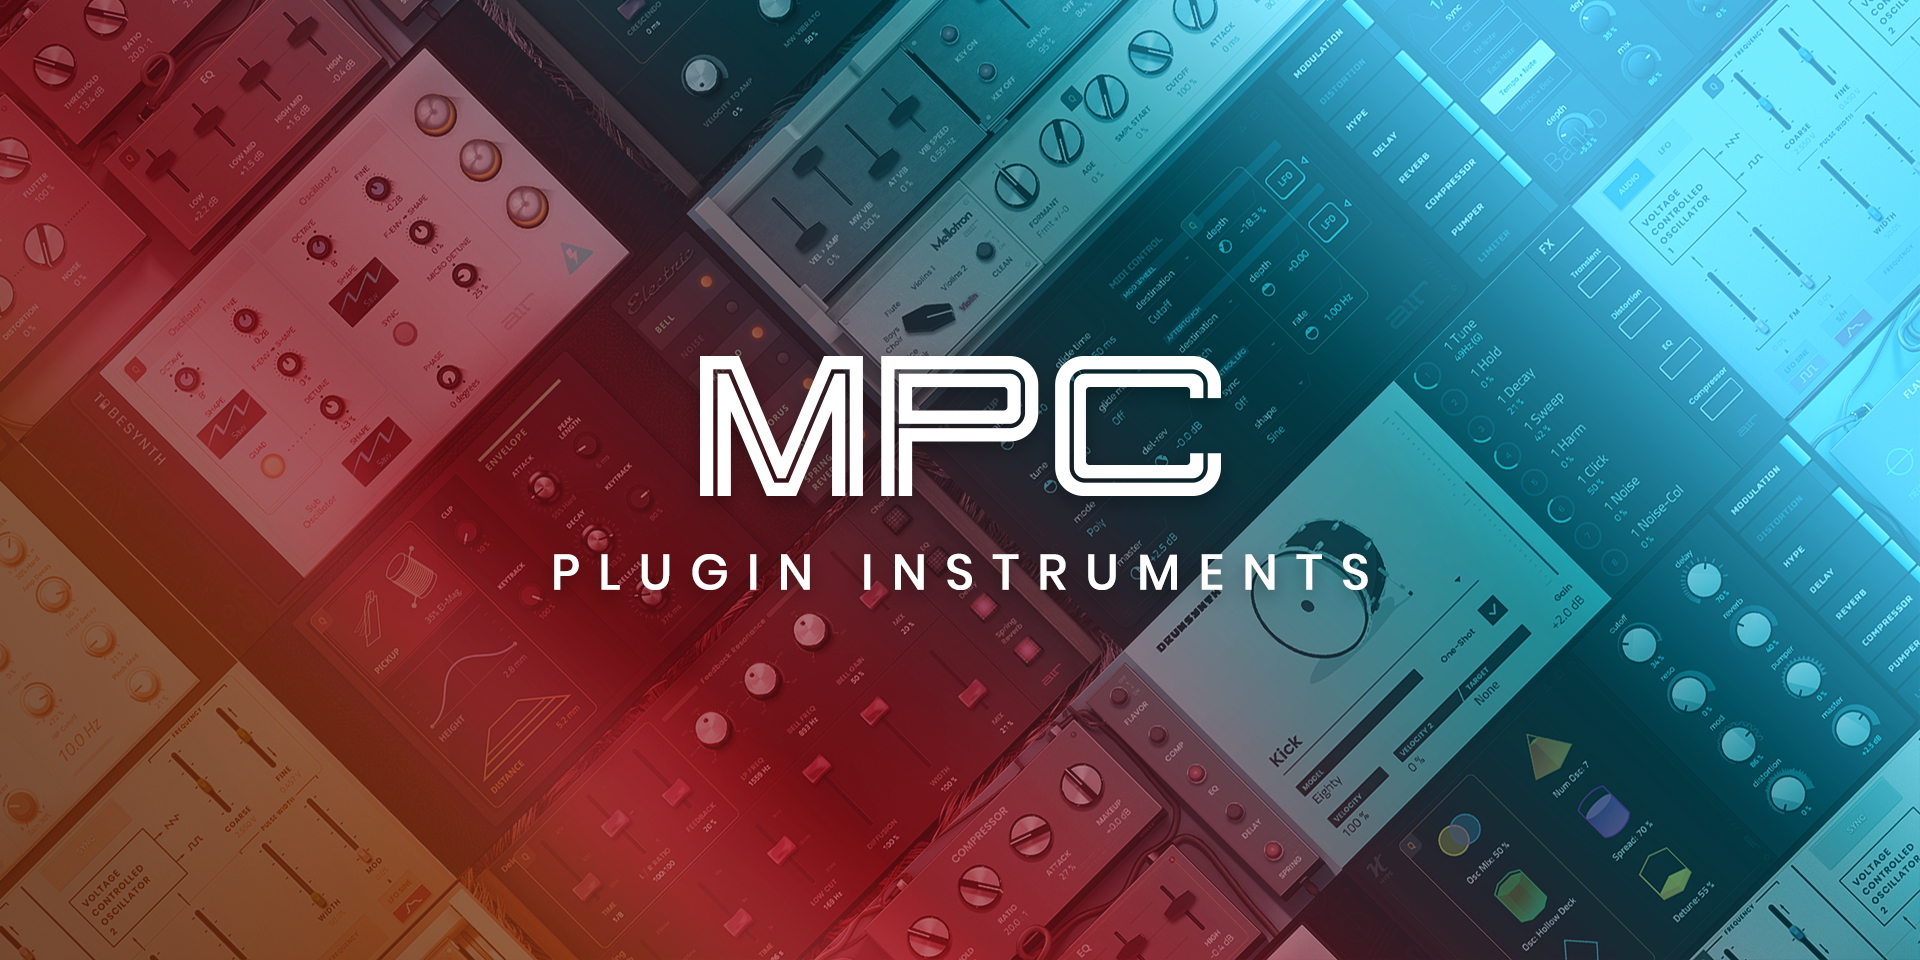 MPC Plugin Instruments